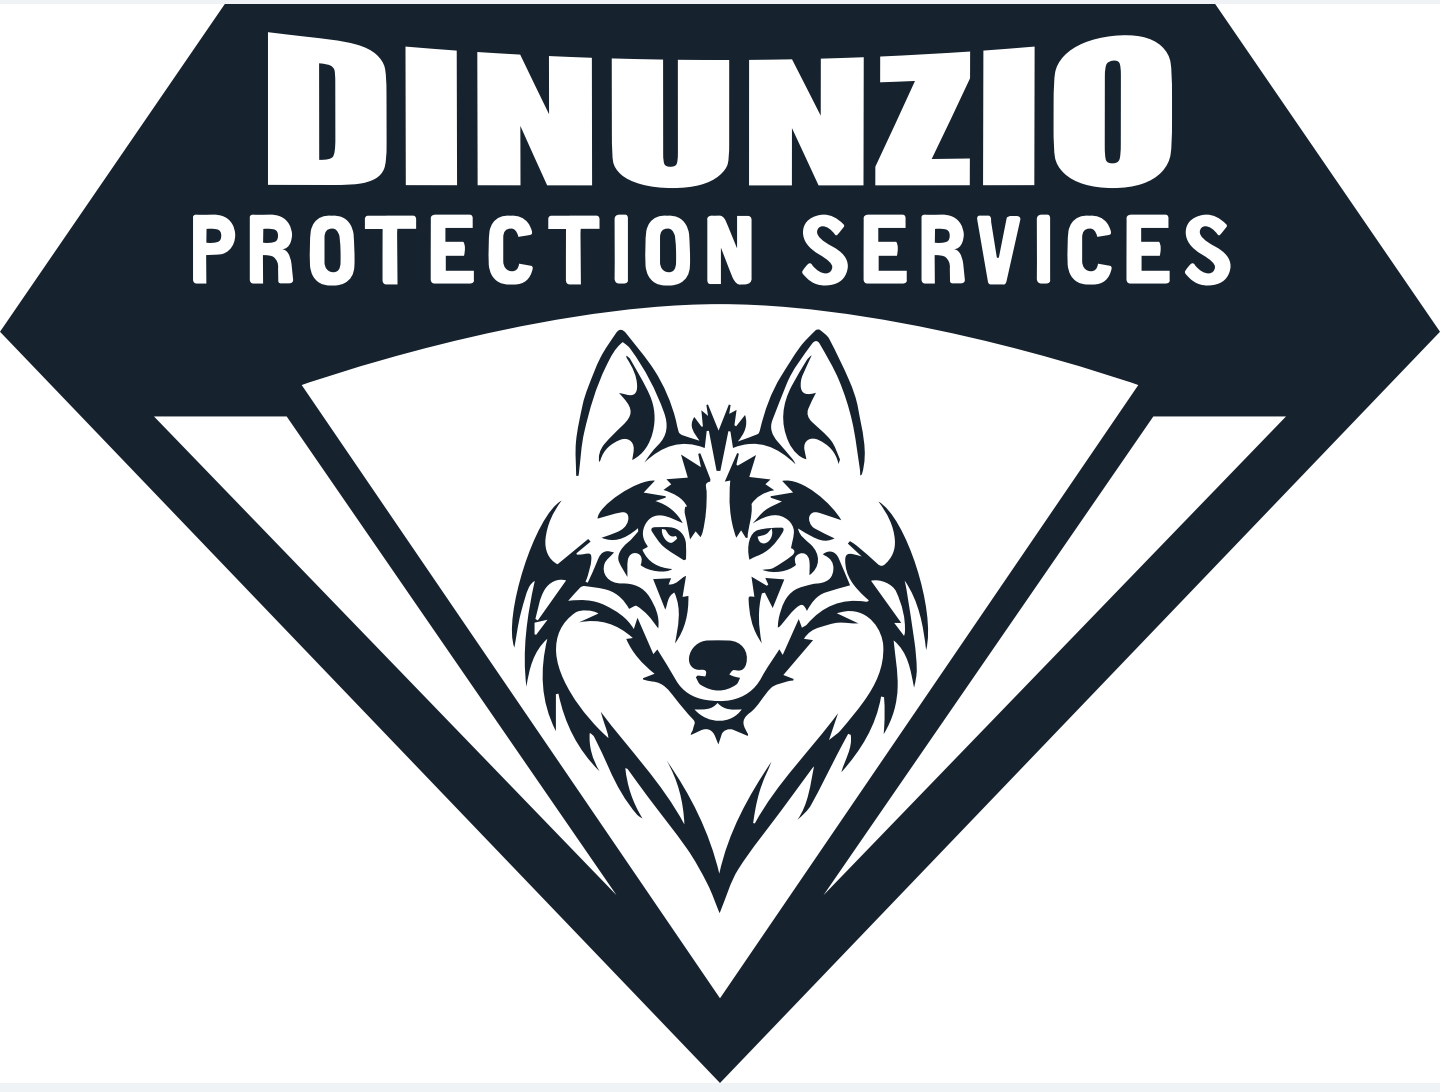 Dinunzio Protection Services